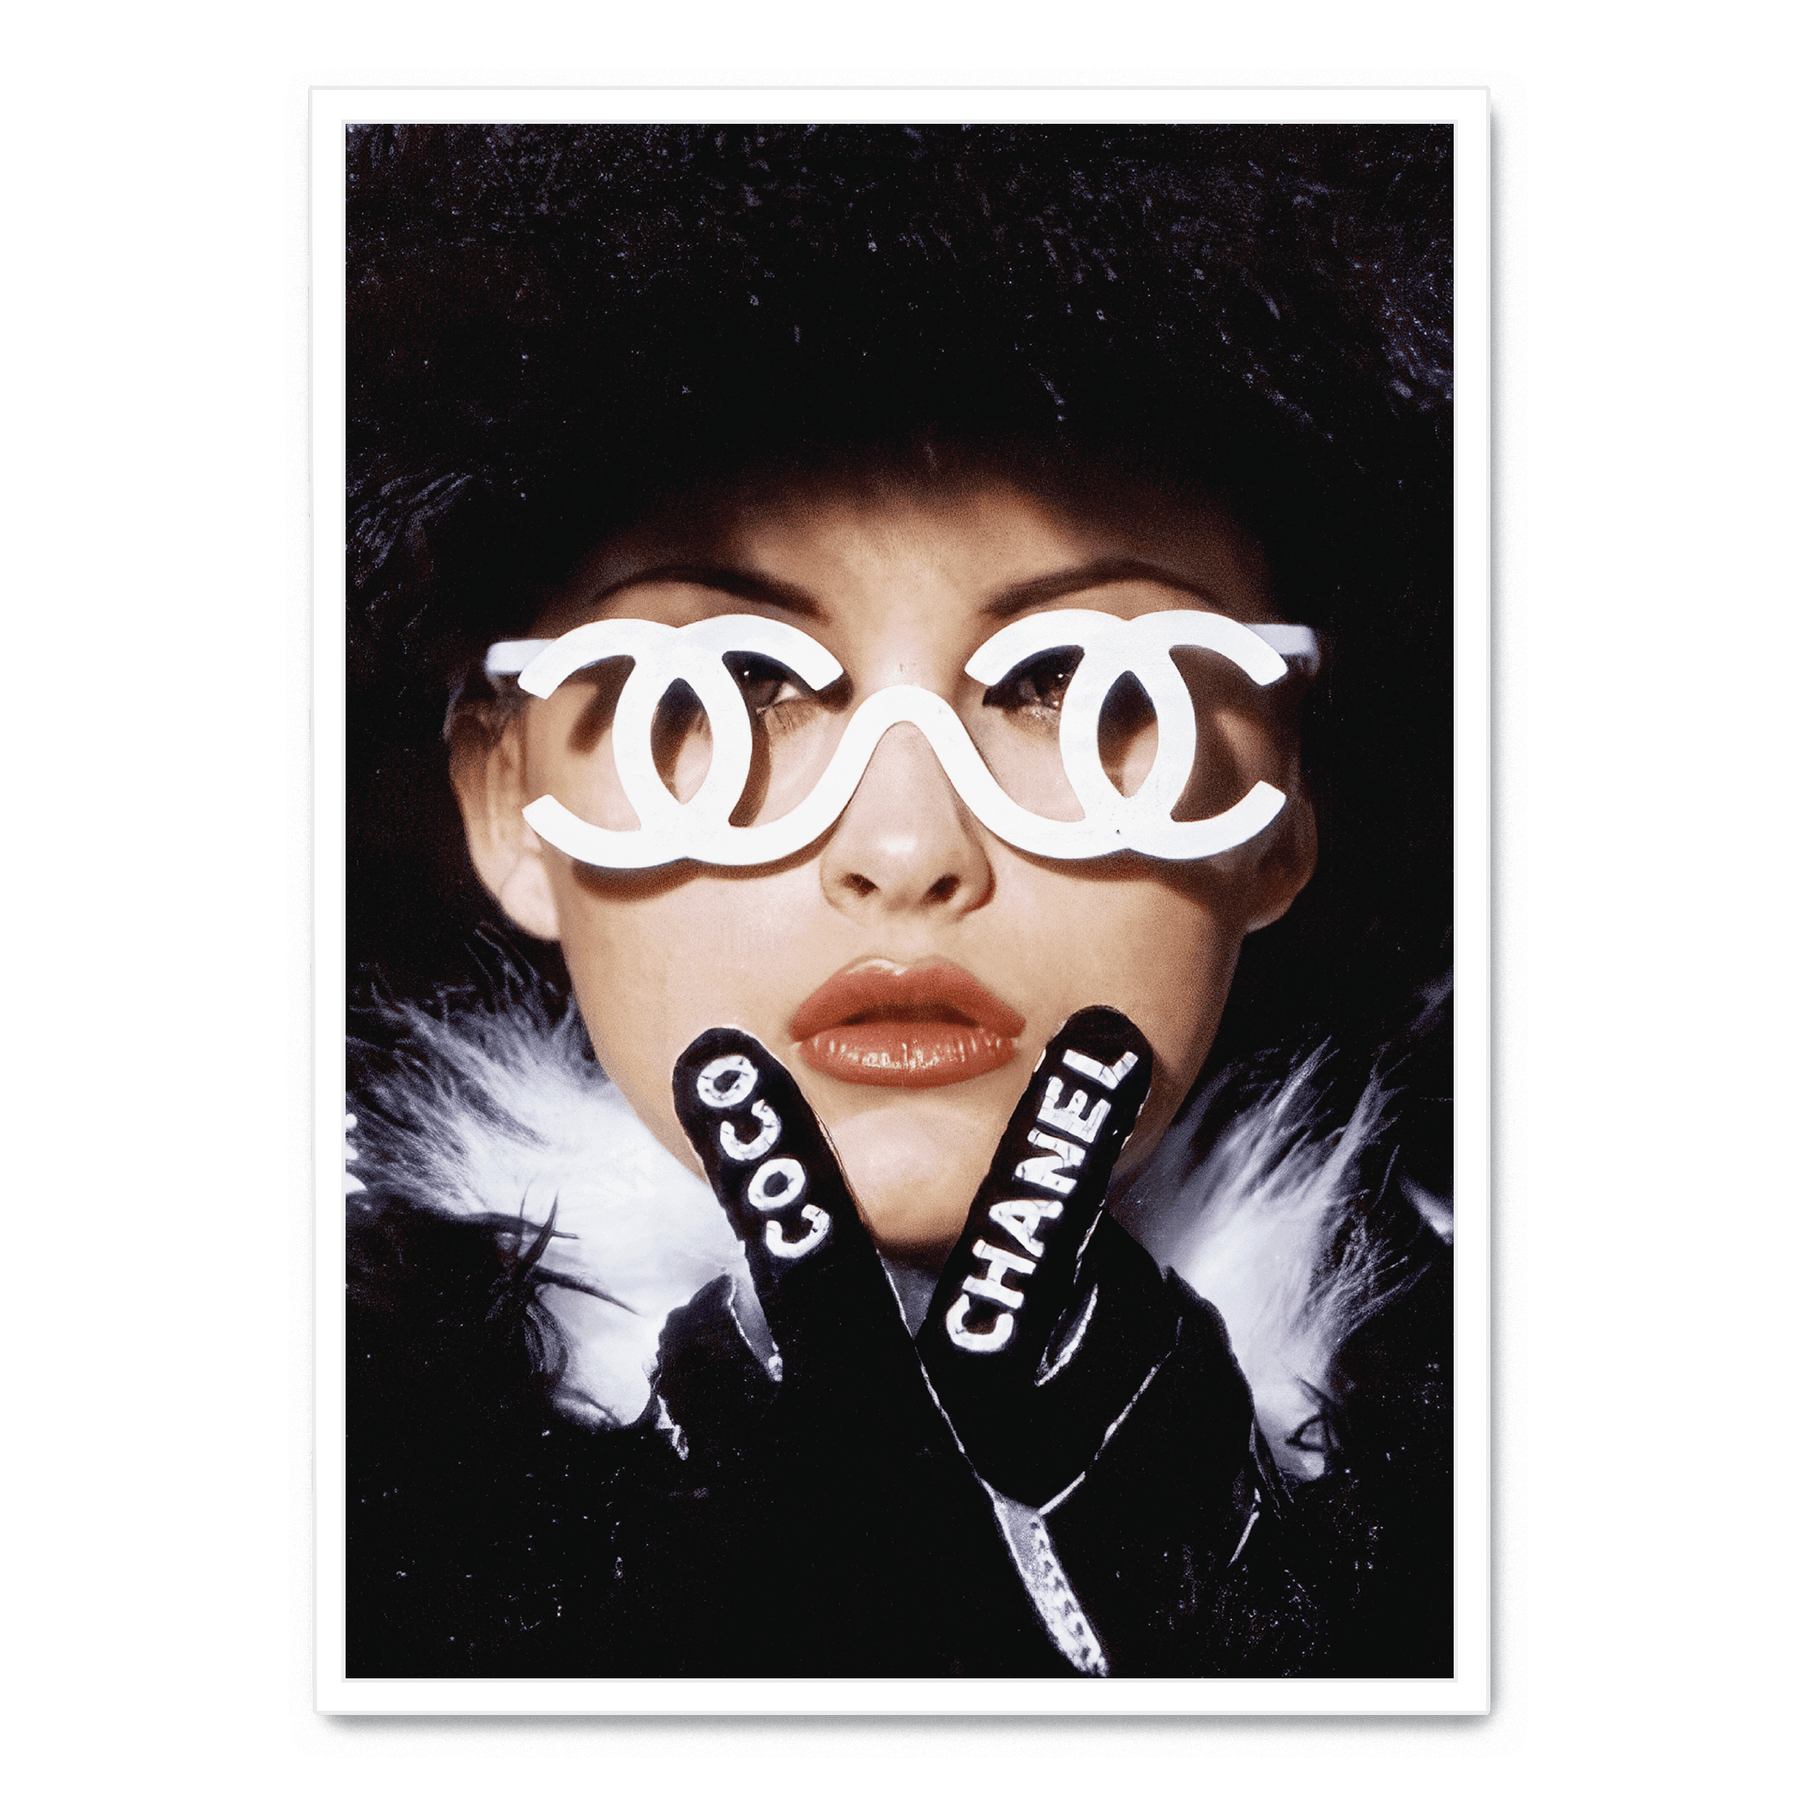 Affiche Coco Chanel - Affiche A3 29x42cm